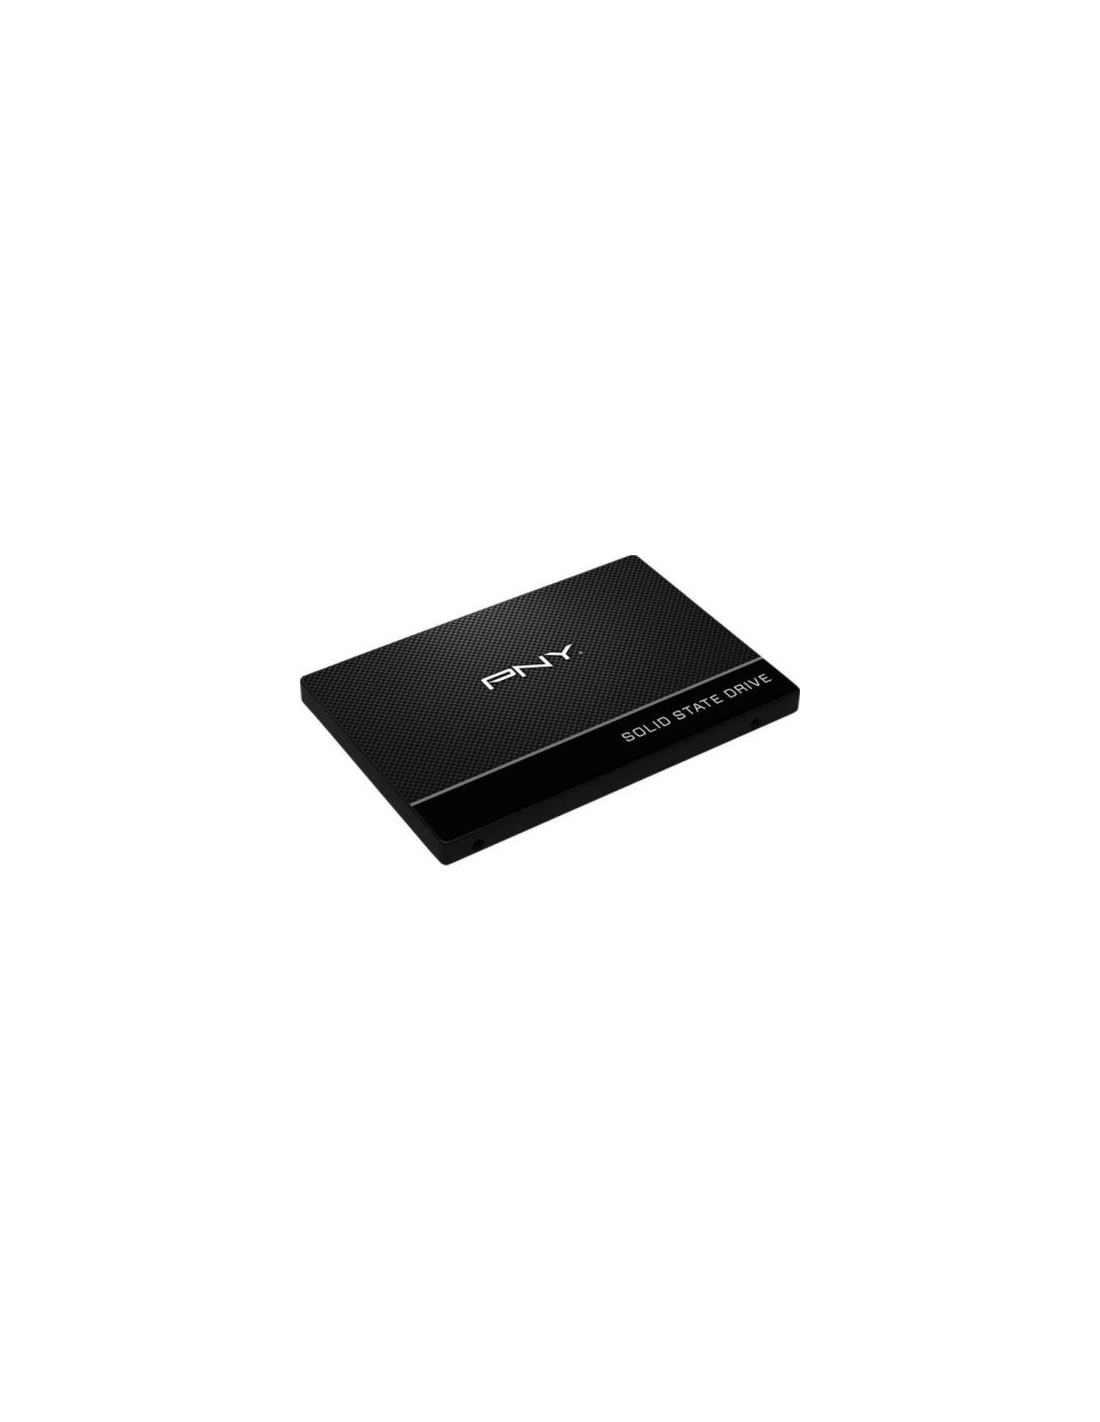 PNY CS900 240GB Internal SSD 2.5